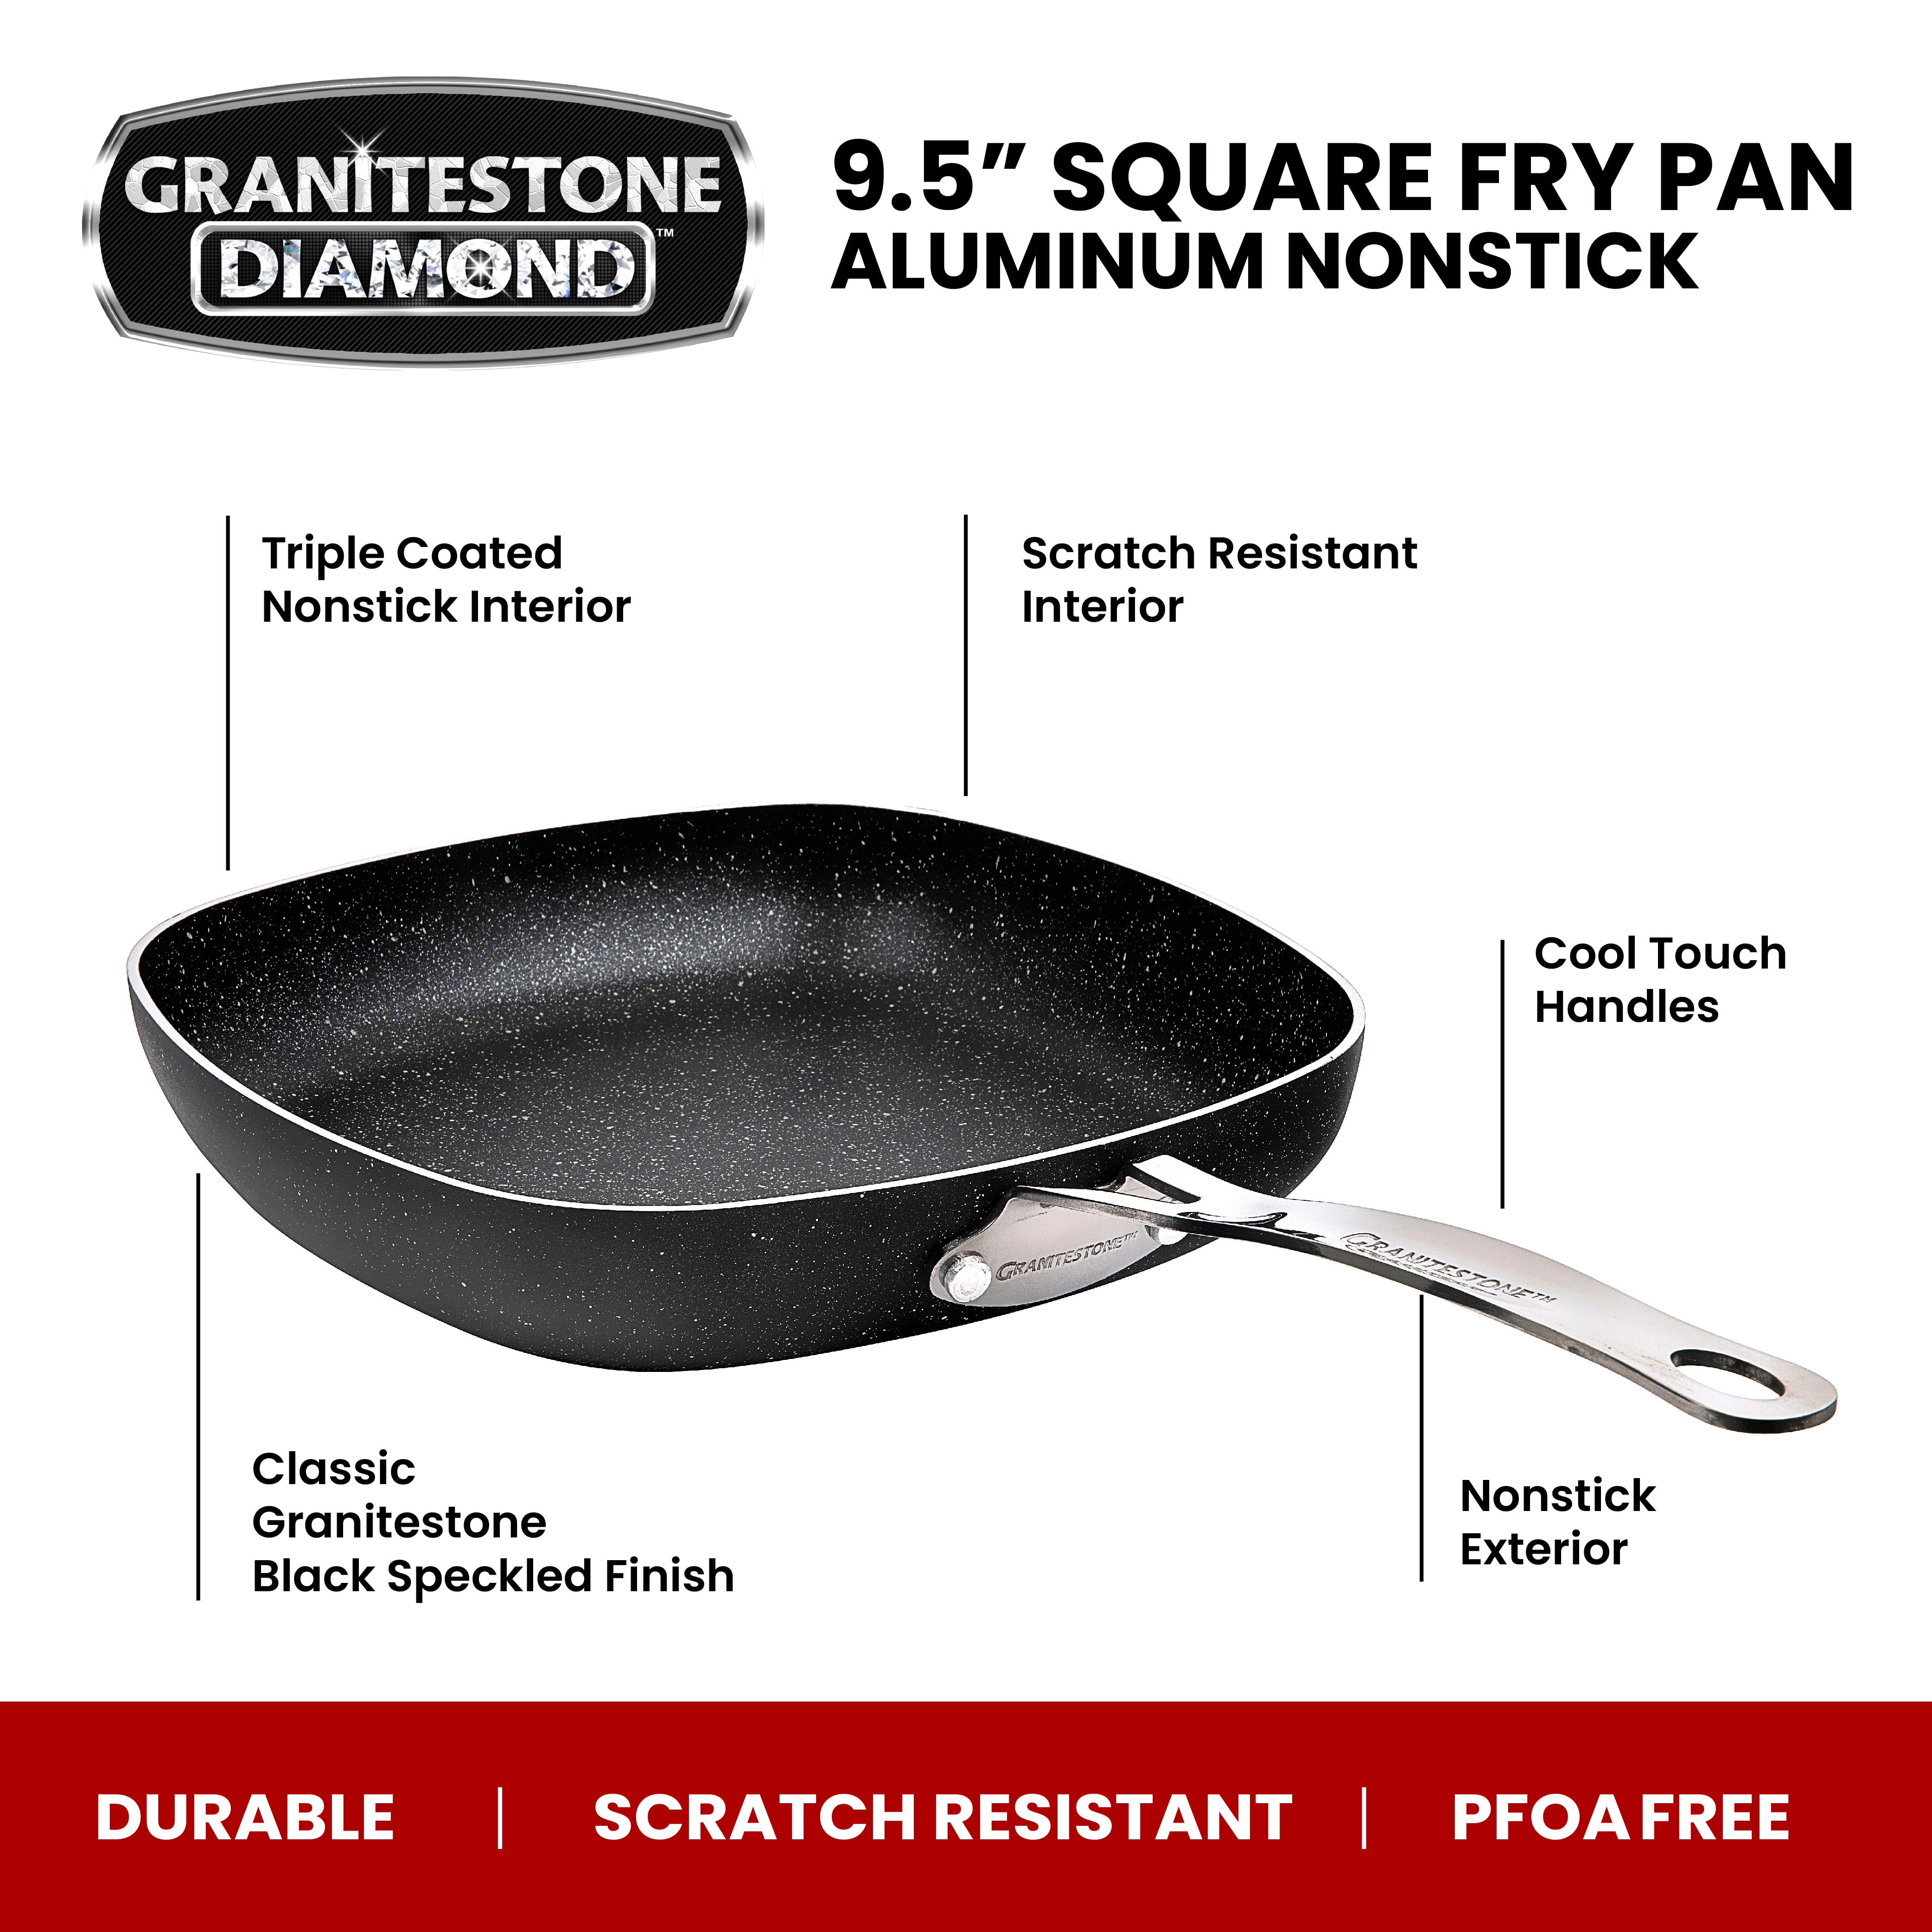 OrGreenic Diamond Granite Pan TV Spot, 'Tired of Scraping Pans?' 